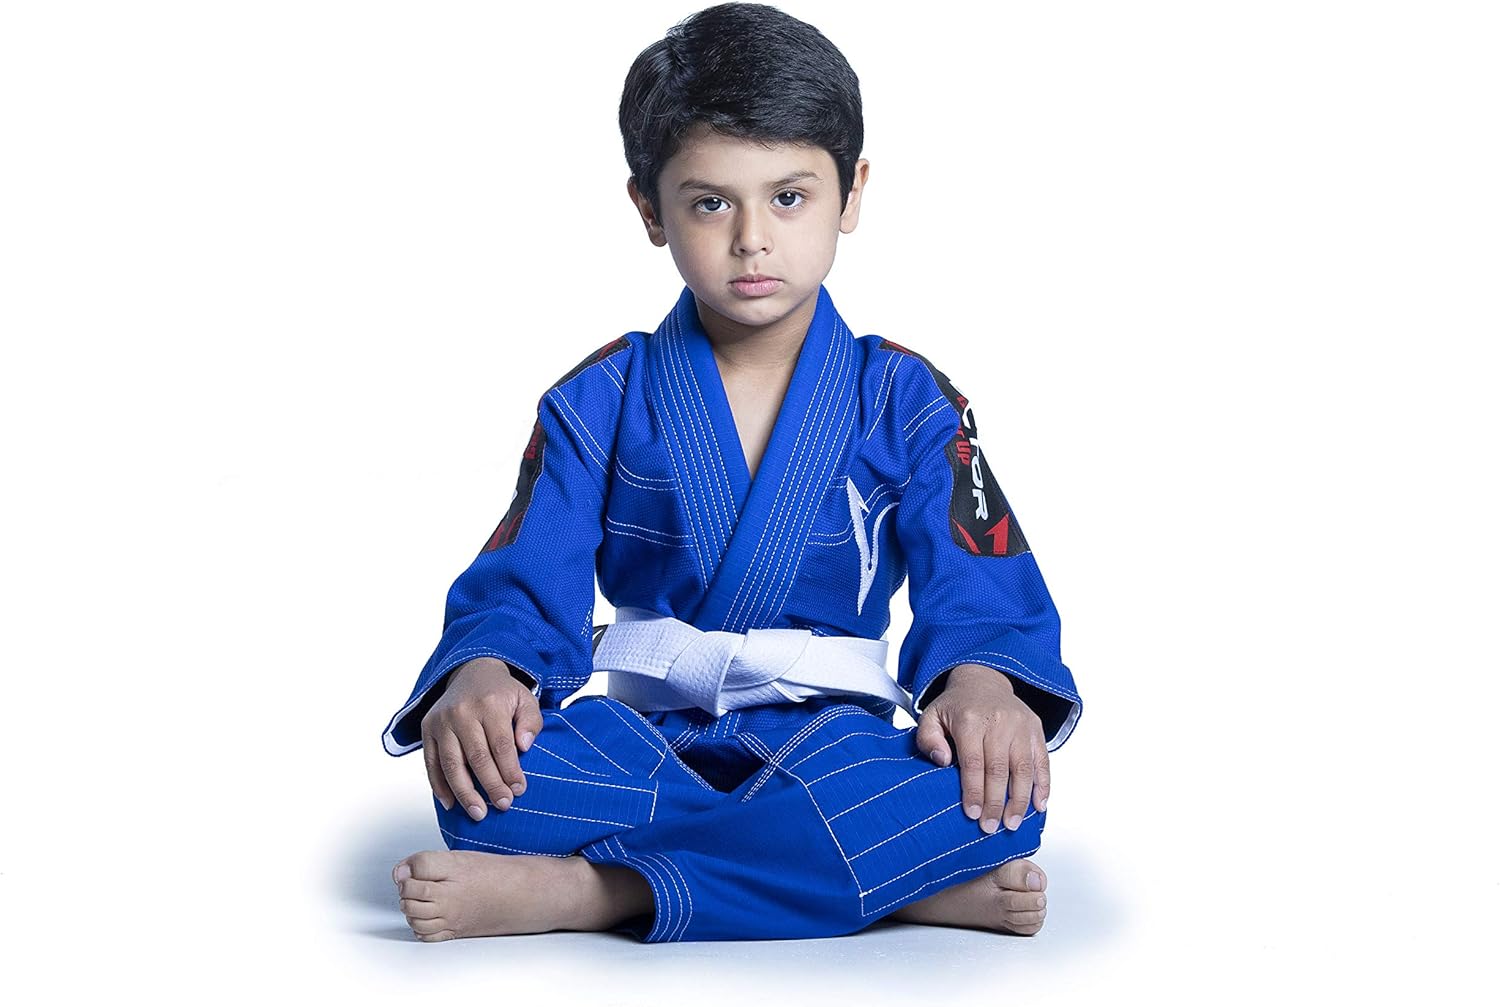 Eclipse Martial Art Supplies sporting goods Brazilian BJJ Gi Jiu Jitsu Gi for Child Kids Gi Uniform Durable Pant & Jacket 100% Cotton with Free Belt